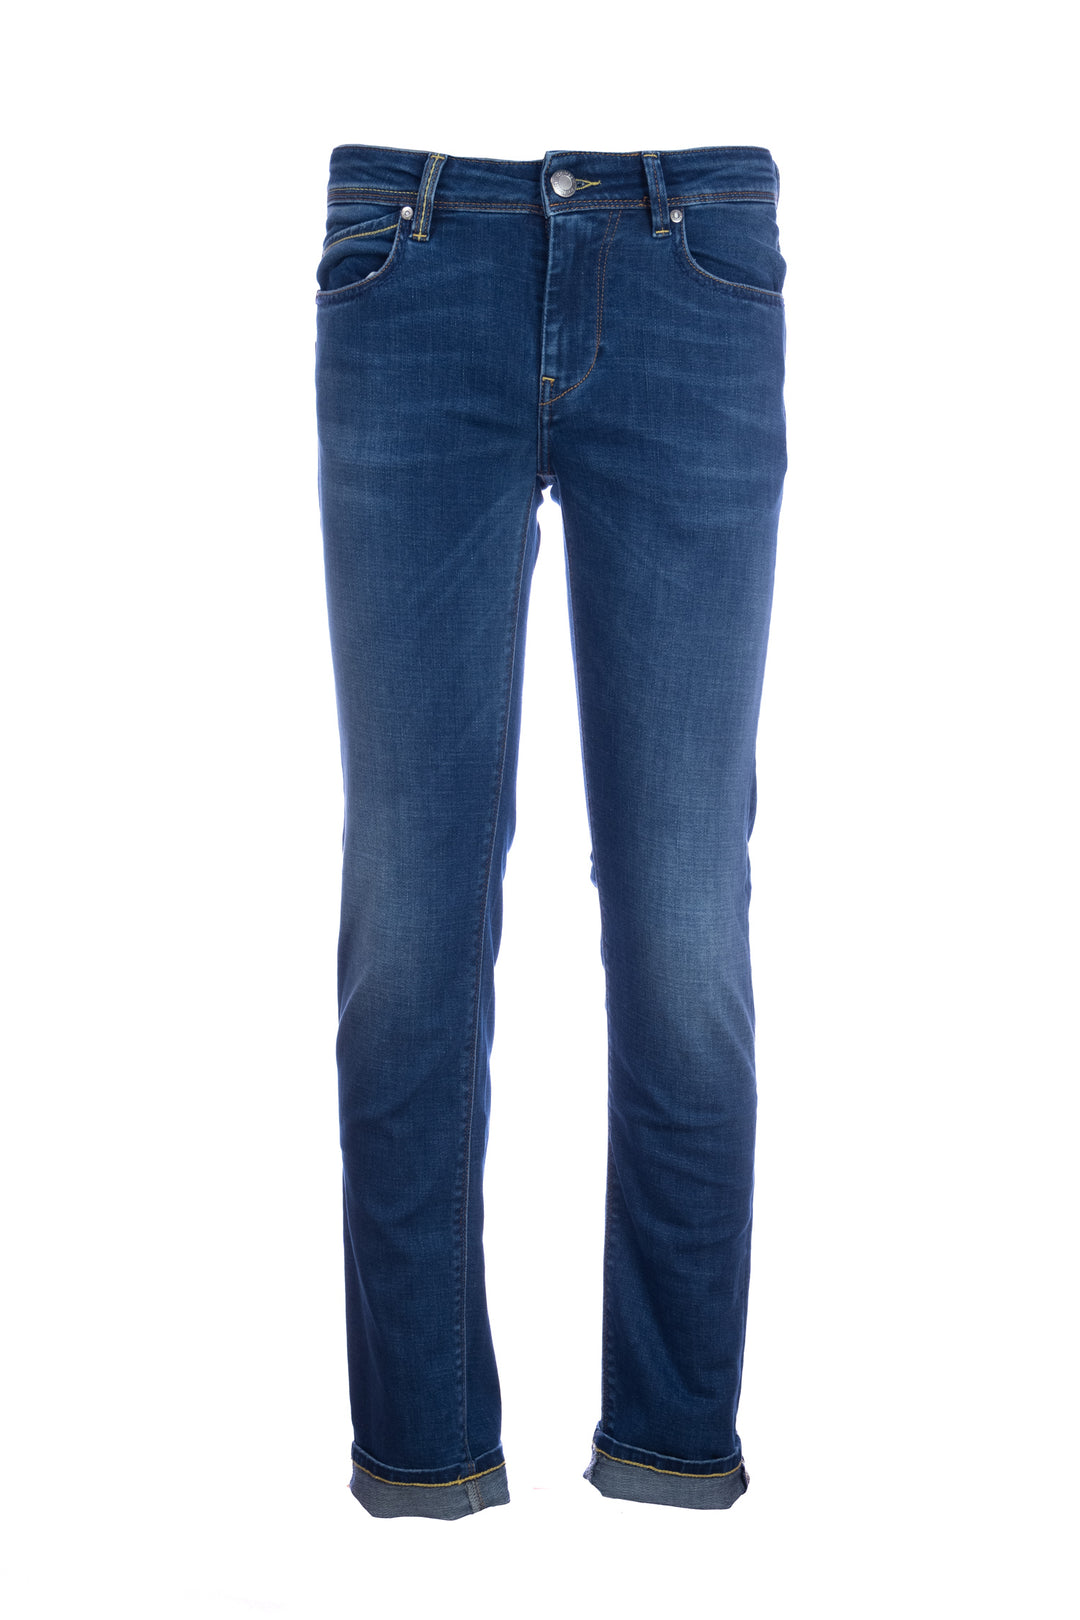 RE-HASH Jeans 5 tasche “RUBENS-Z” in denim stretch lavaggio medio 9oz - Mancinelli 1954